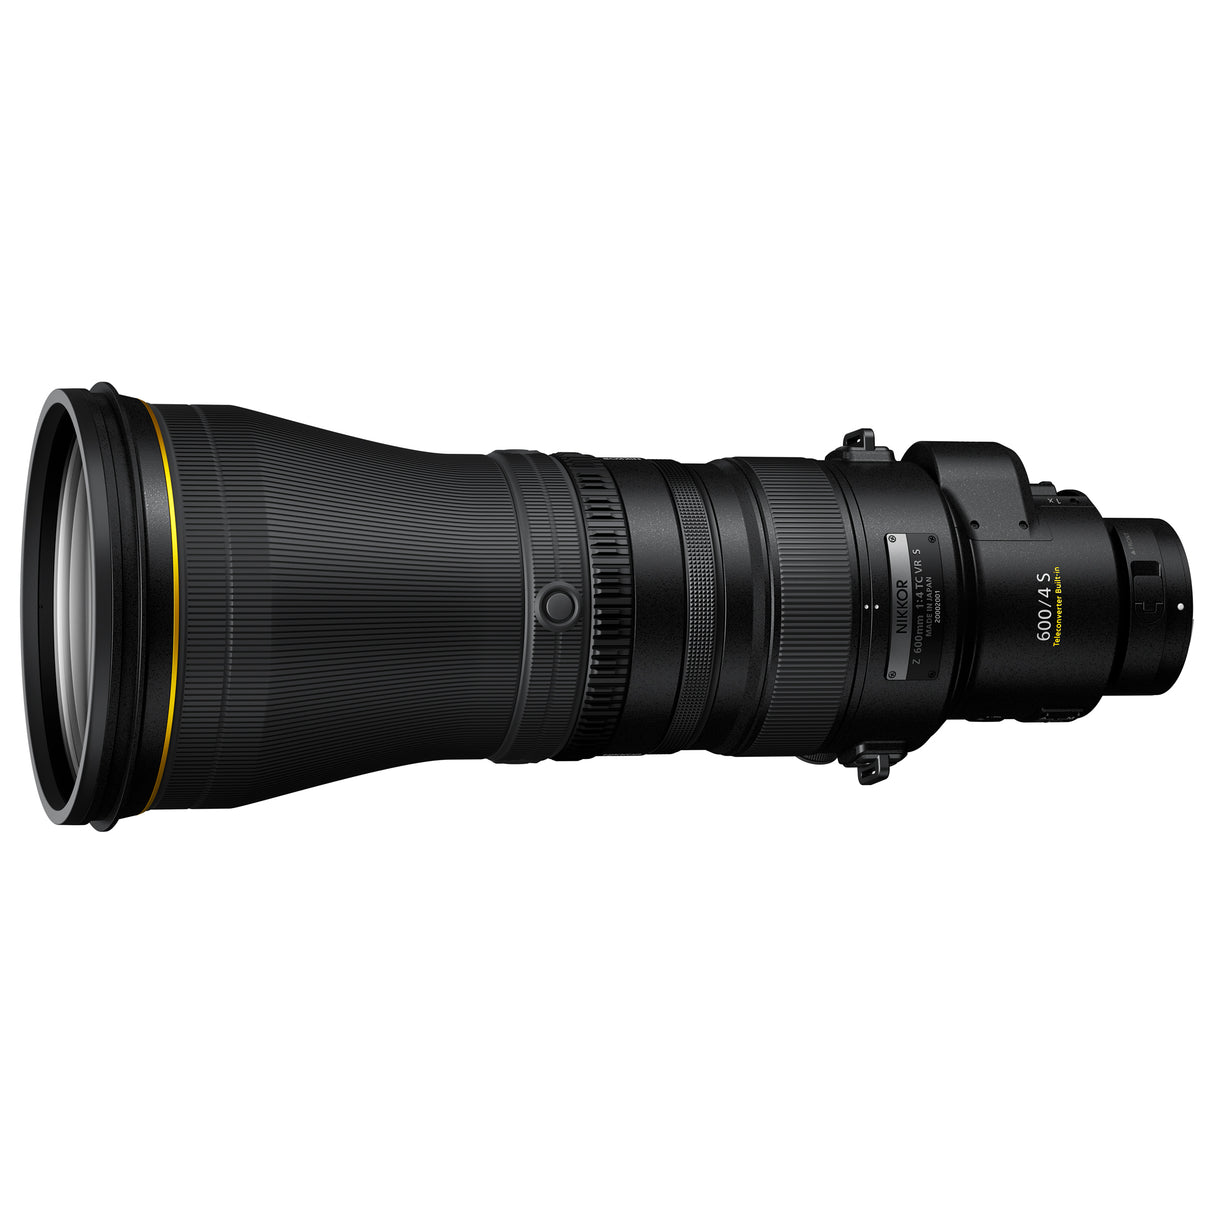 NIKKOR Z 400mm f/2.8 TC VR S Lens